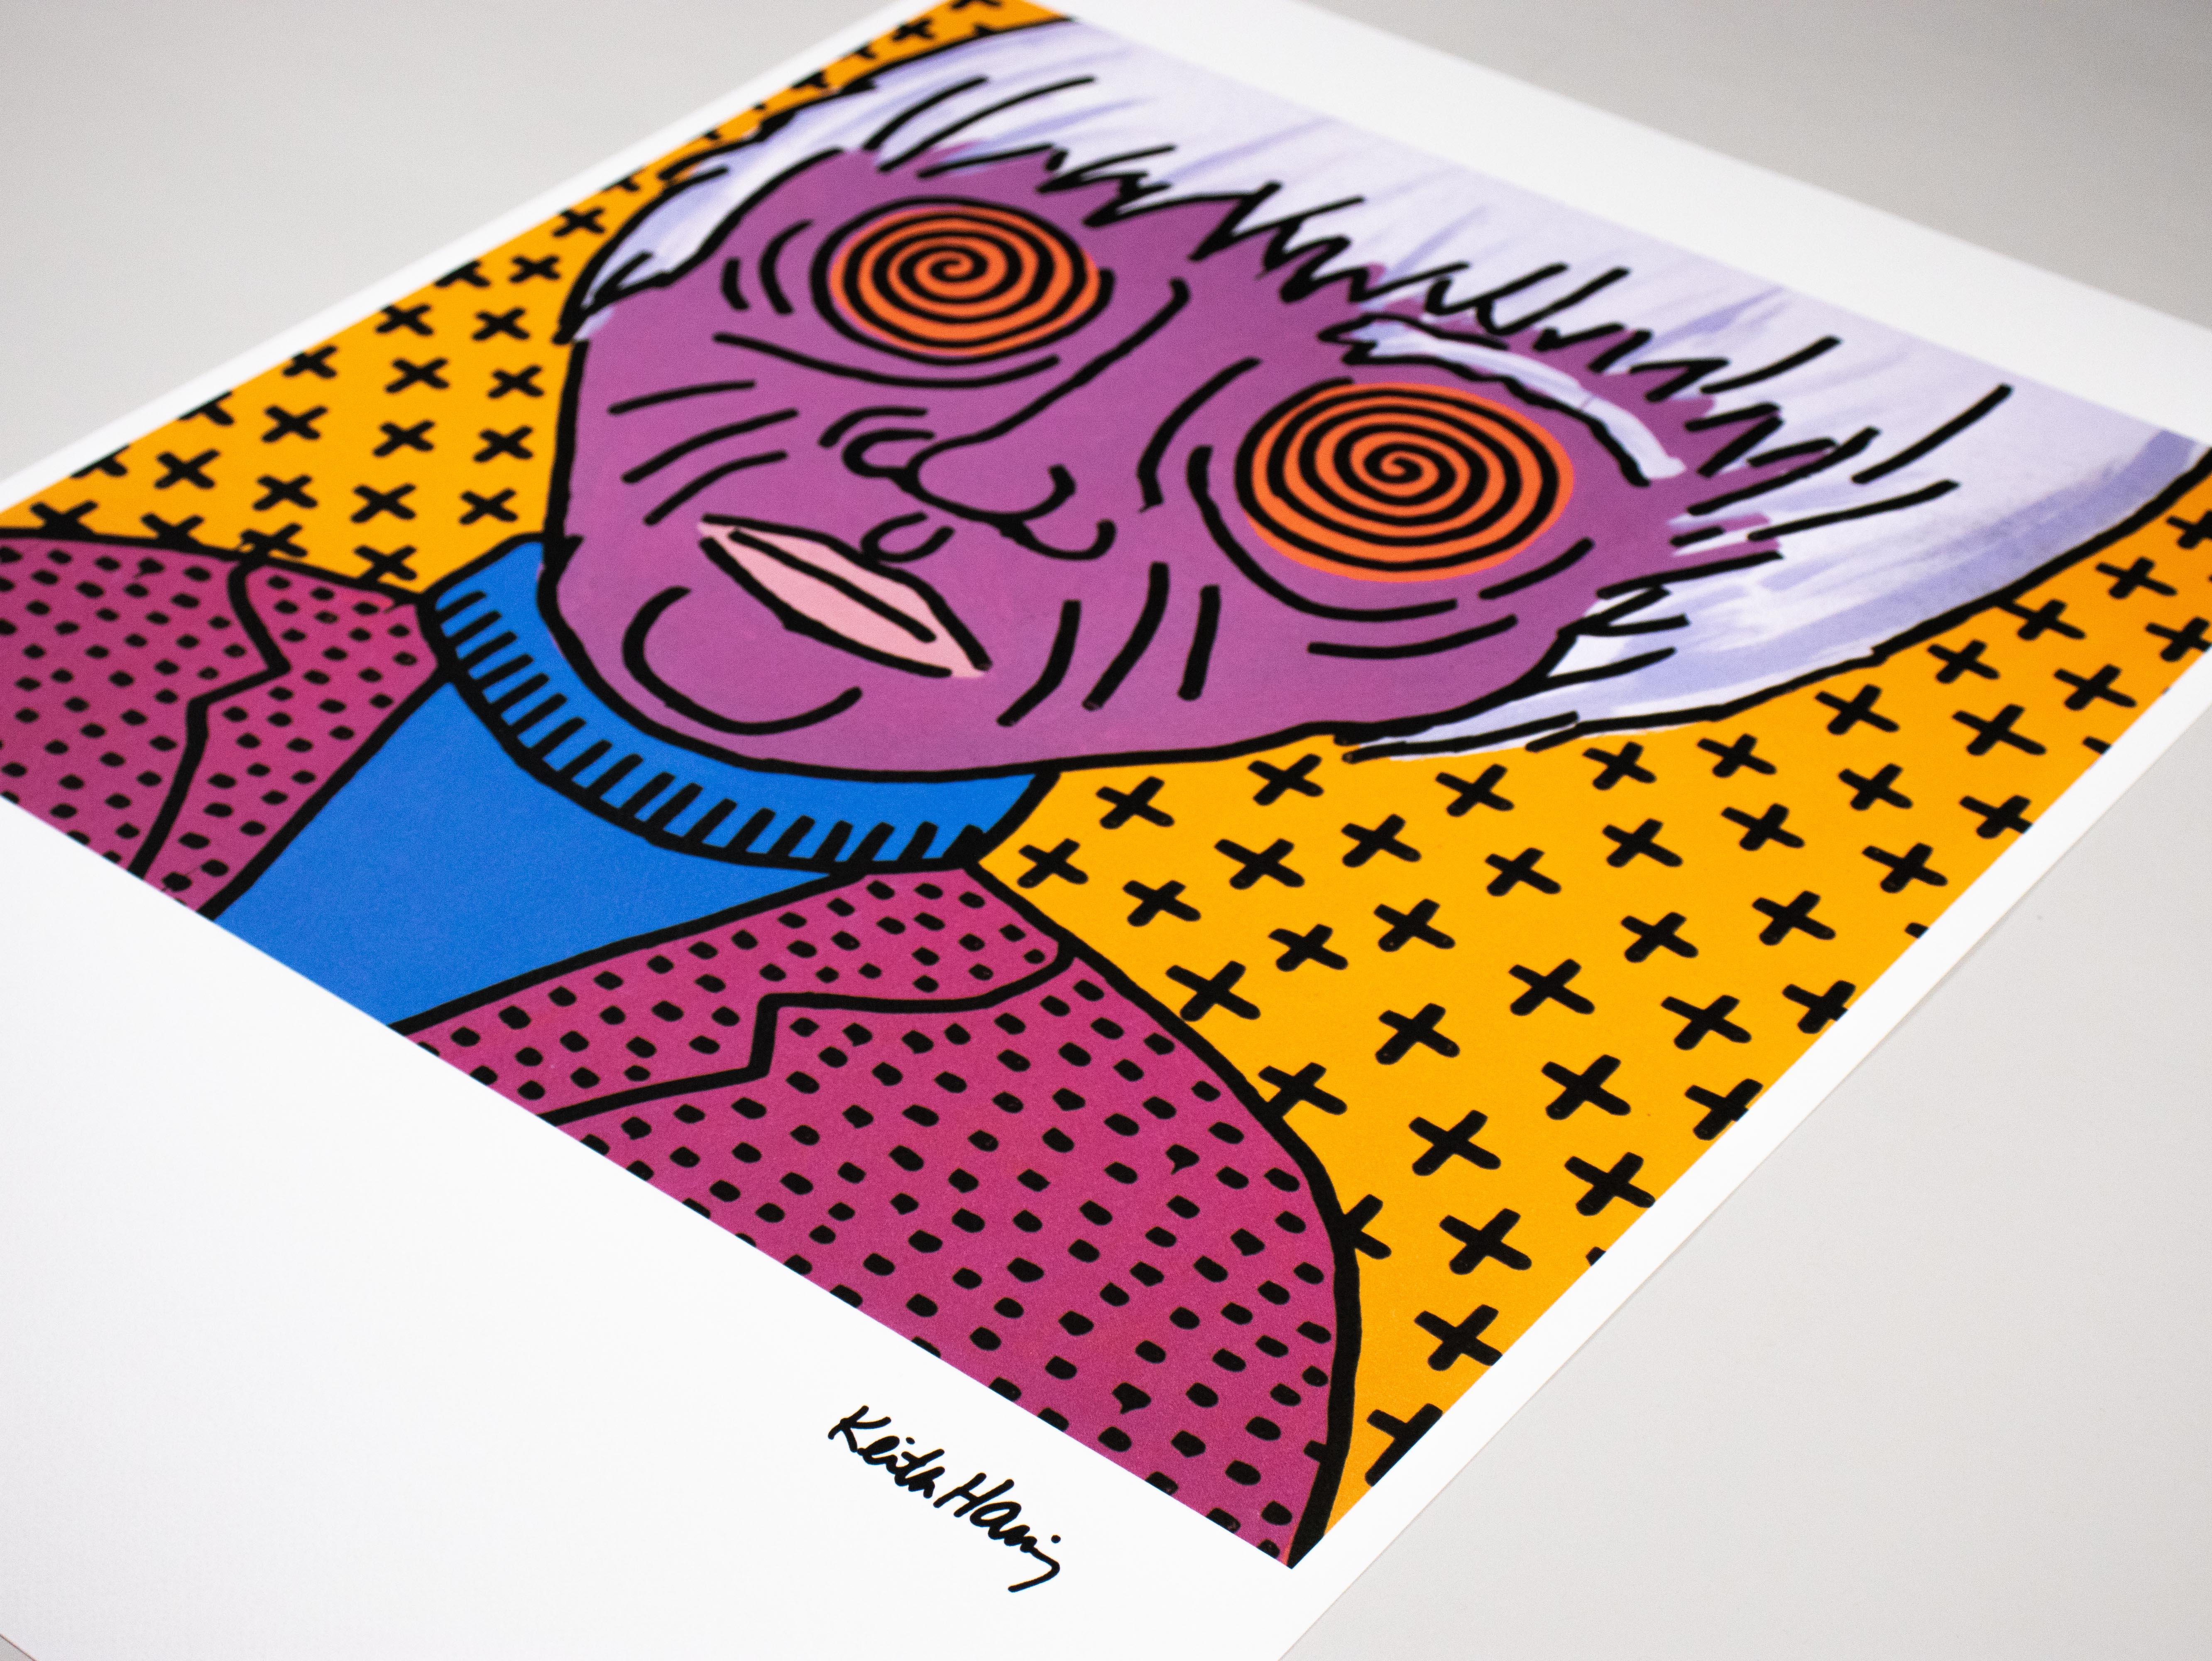 Lithographie – Limitierte Auflage 47/150 Exemplare – Keith Haring Foundation Inc. im Angebot 2